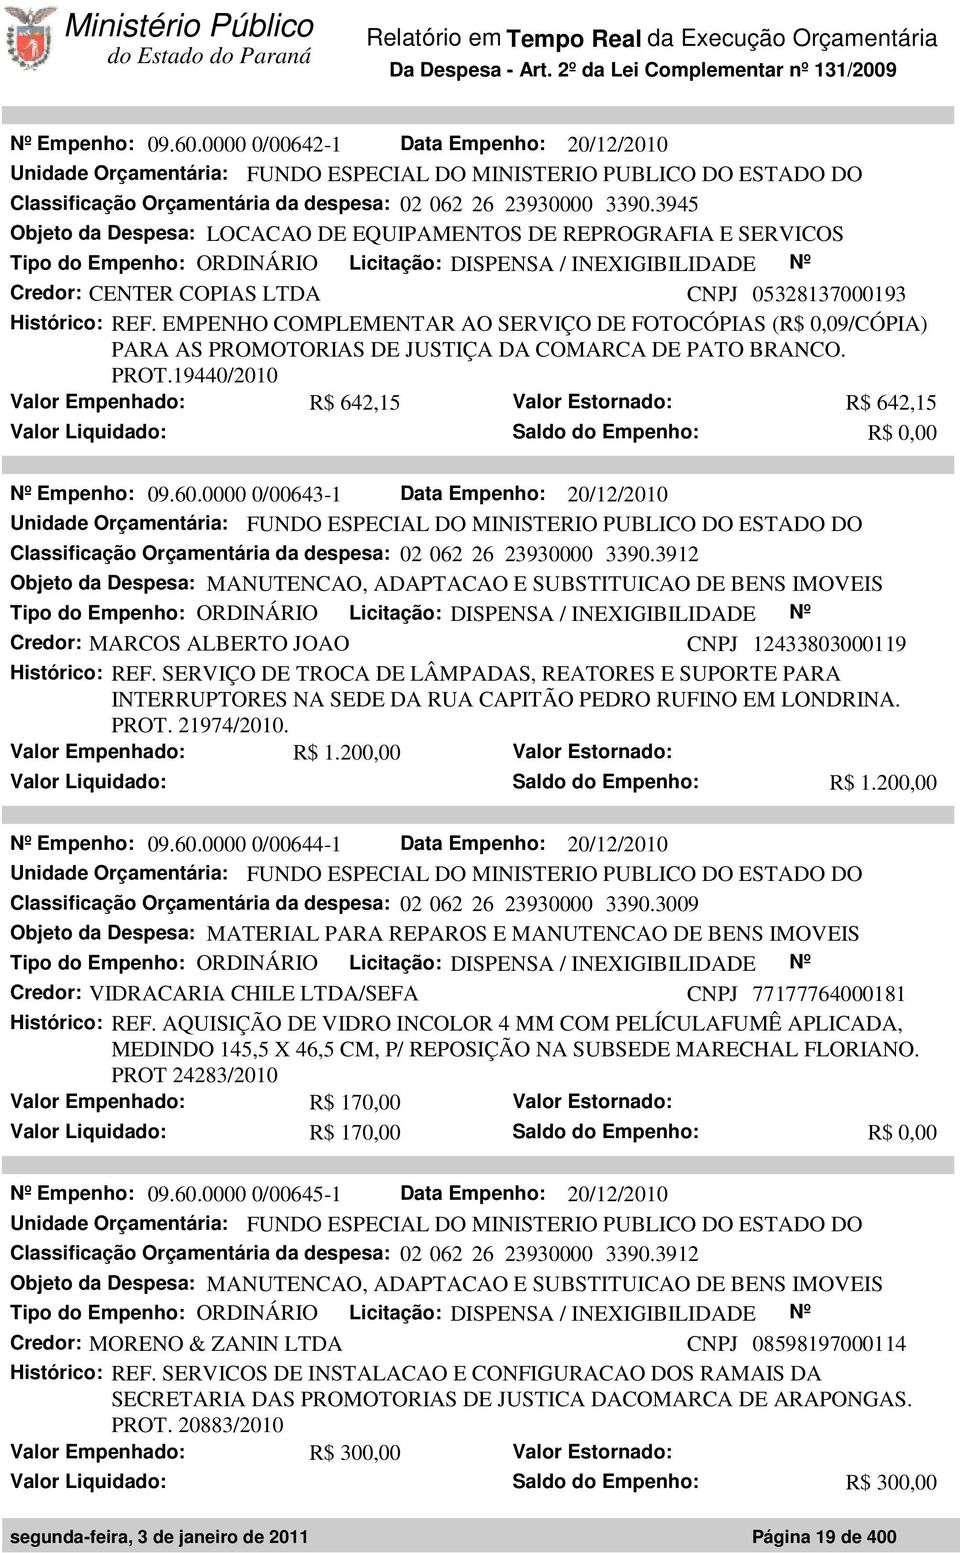 EMPENHO COMPLEMENTAR AO SERVIÇO DE FOTOCÓPIAS (R$ 0,09/CÓPIA) PARA AS PROMOTORIAS DE JUSTIÇA DA COMARCA DE PATO BRANCO. PROT.